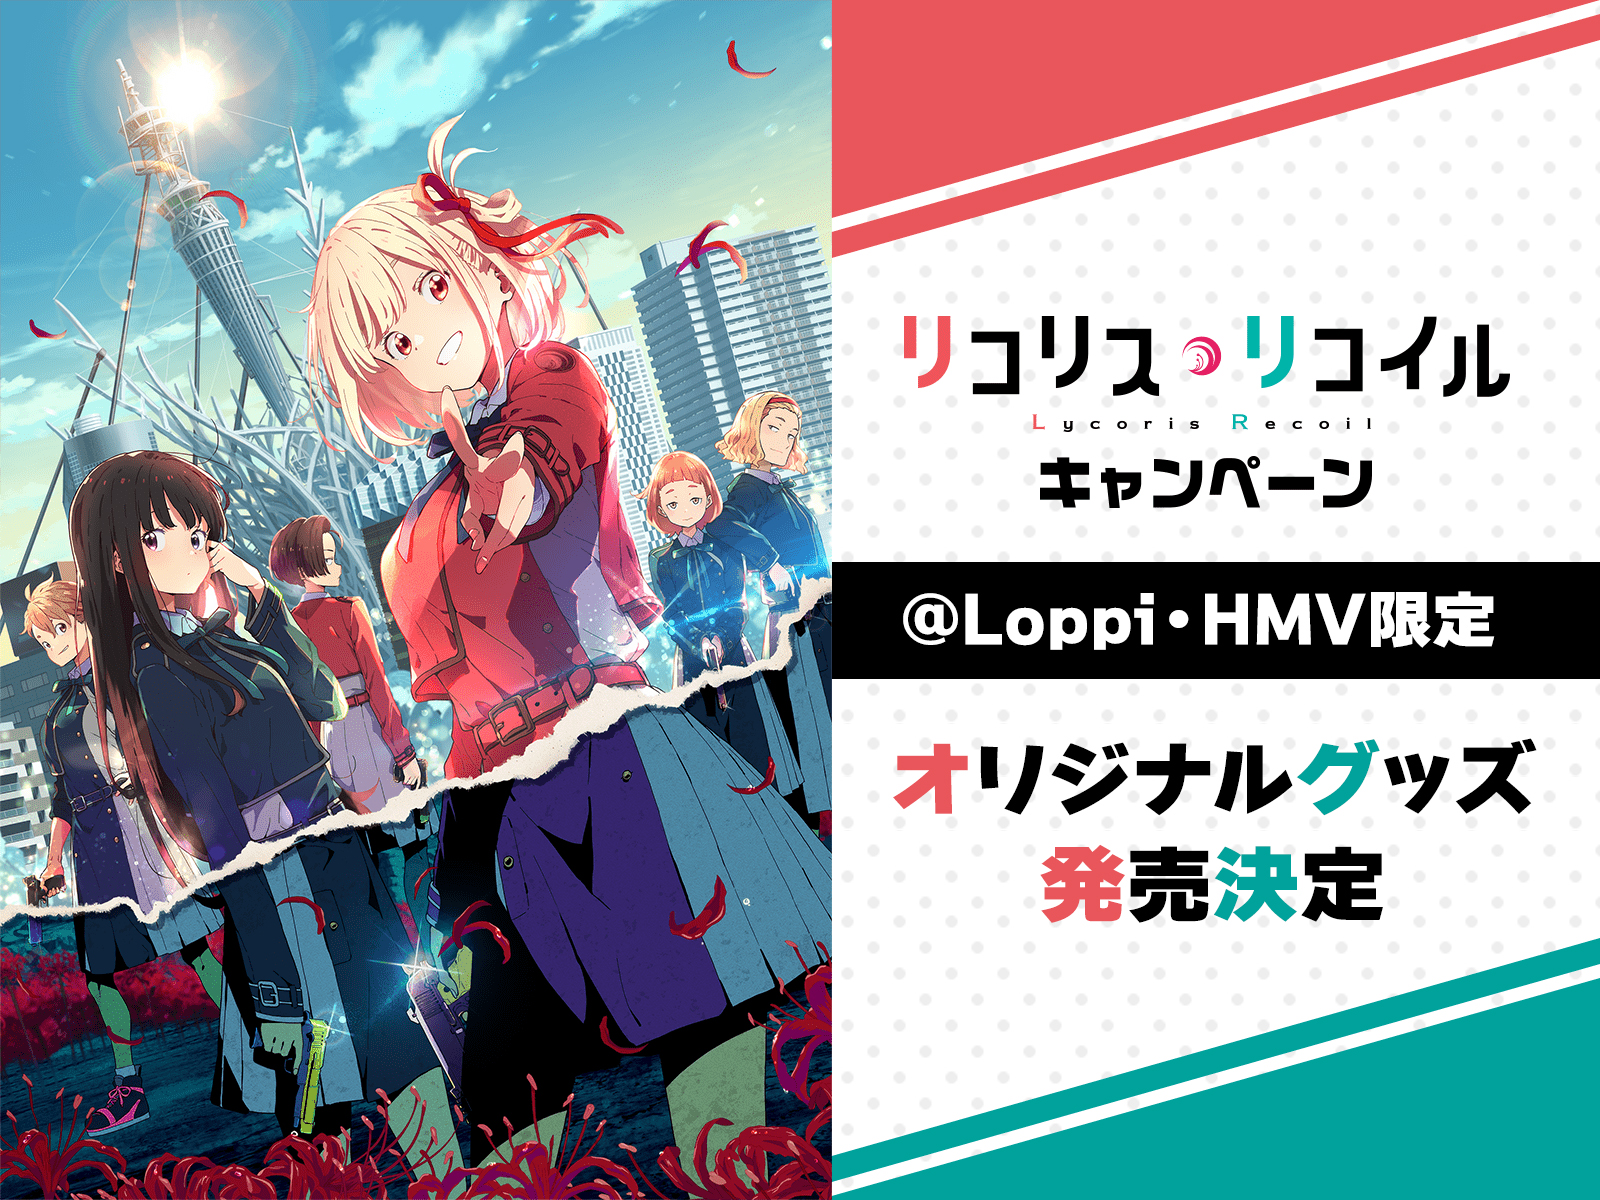 TVアニメ『リコリス・リコイル』@Loppi・HMV限定オリジナルグッズ|グッズ